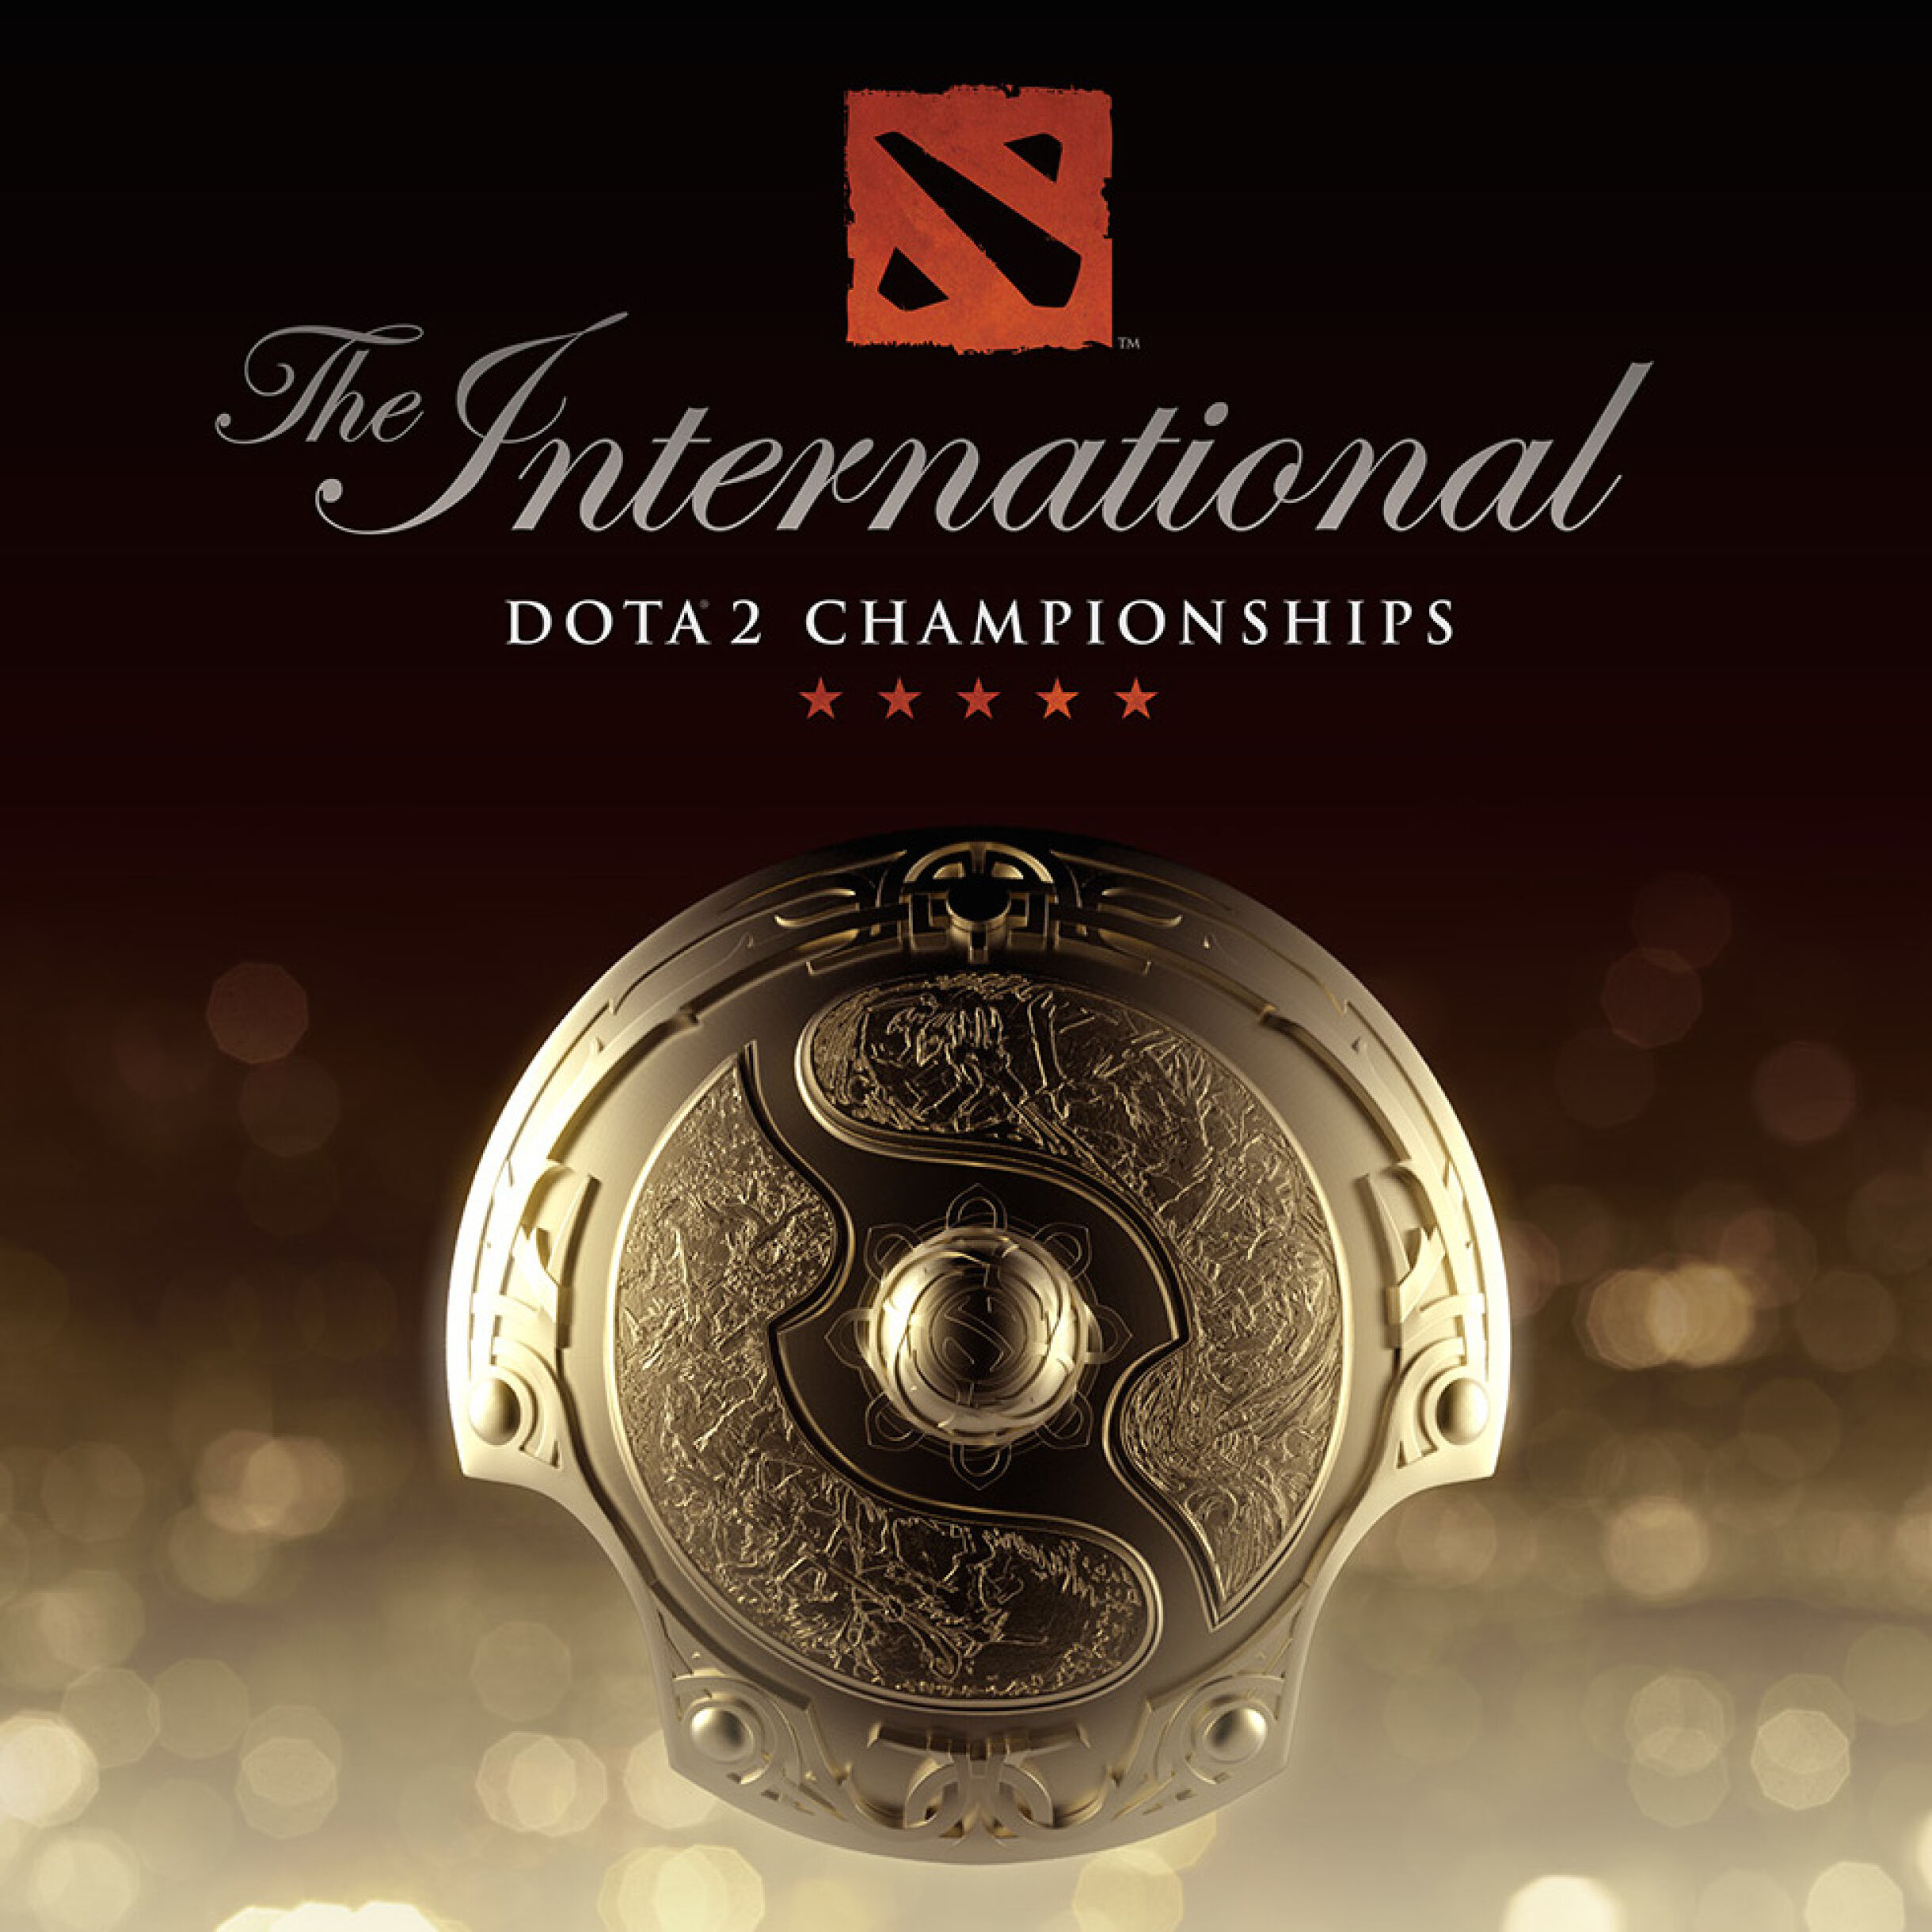 Dota championships 2015